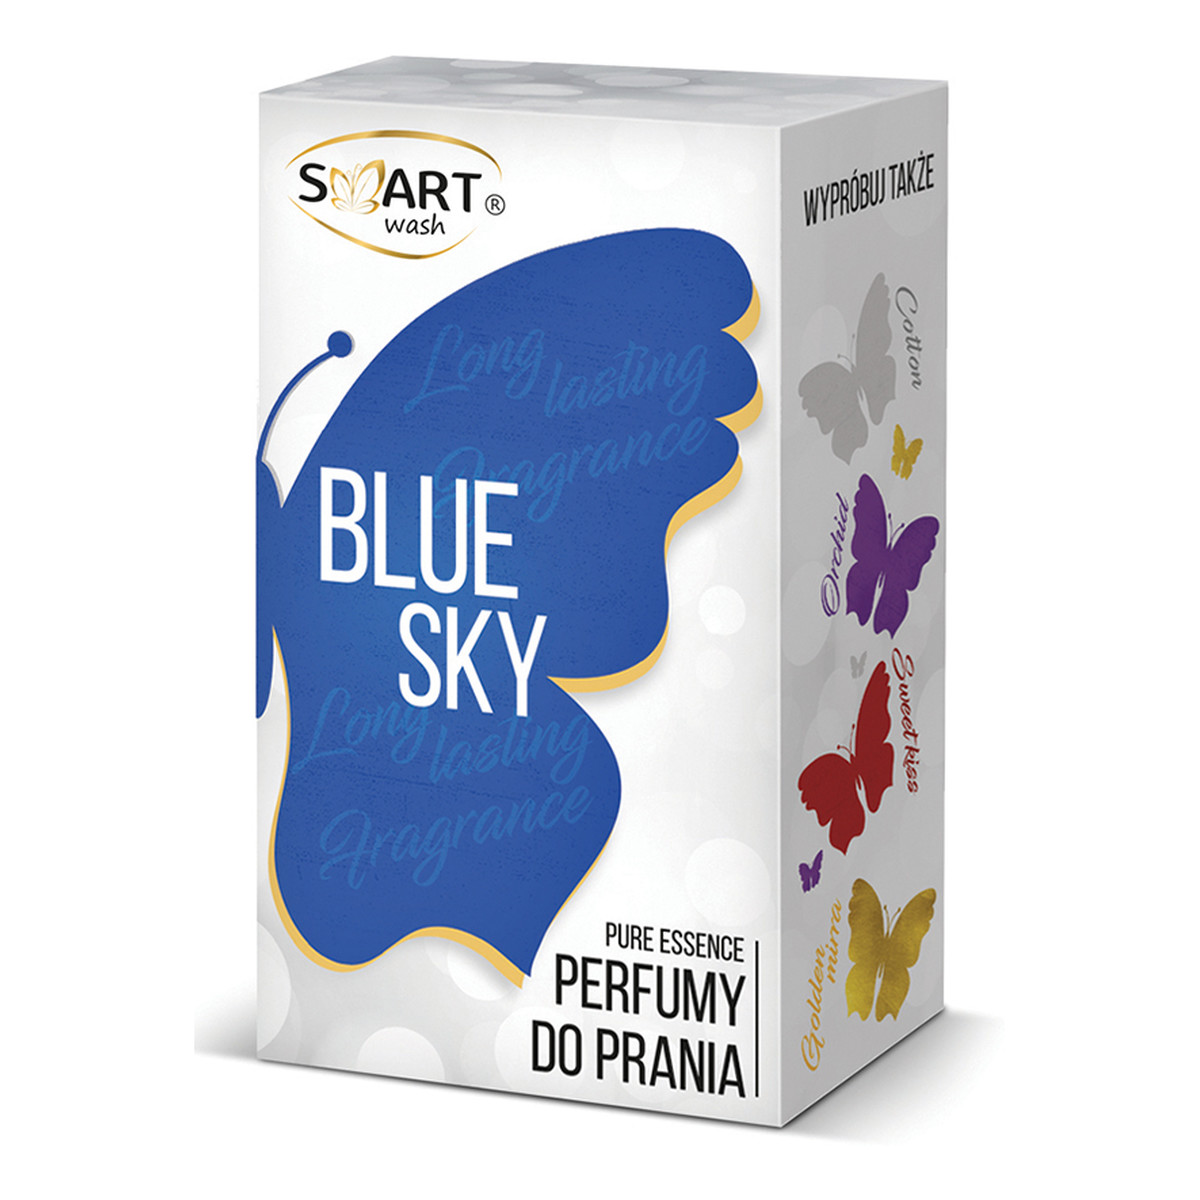 Smart Wash Perfumy do prania Blue Sky 100ml